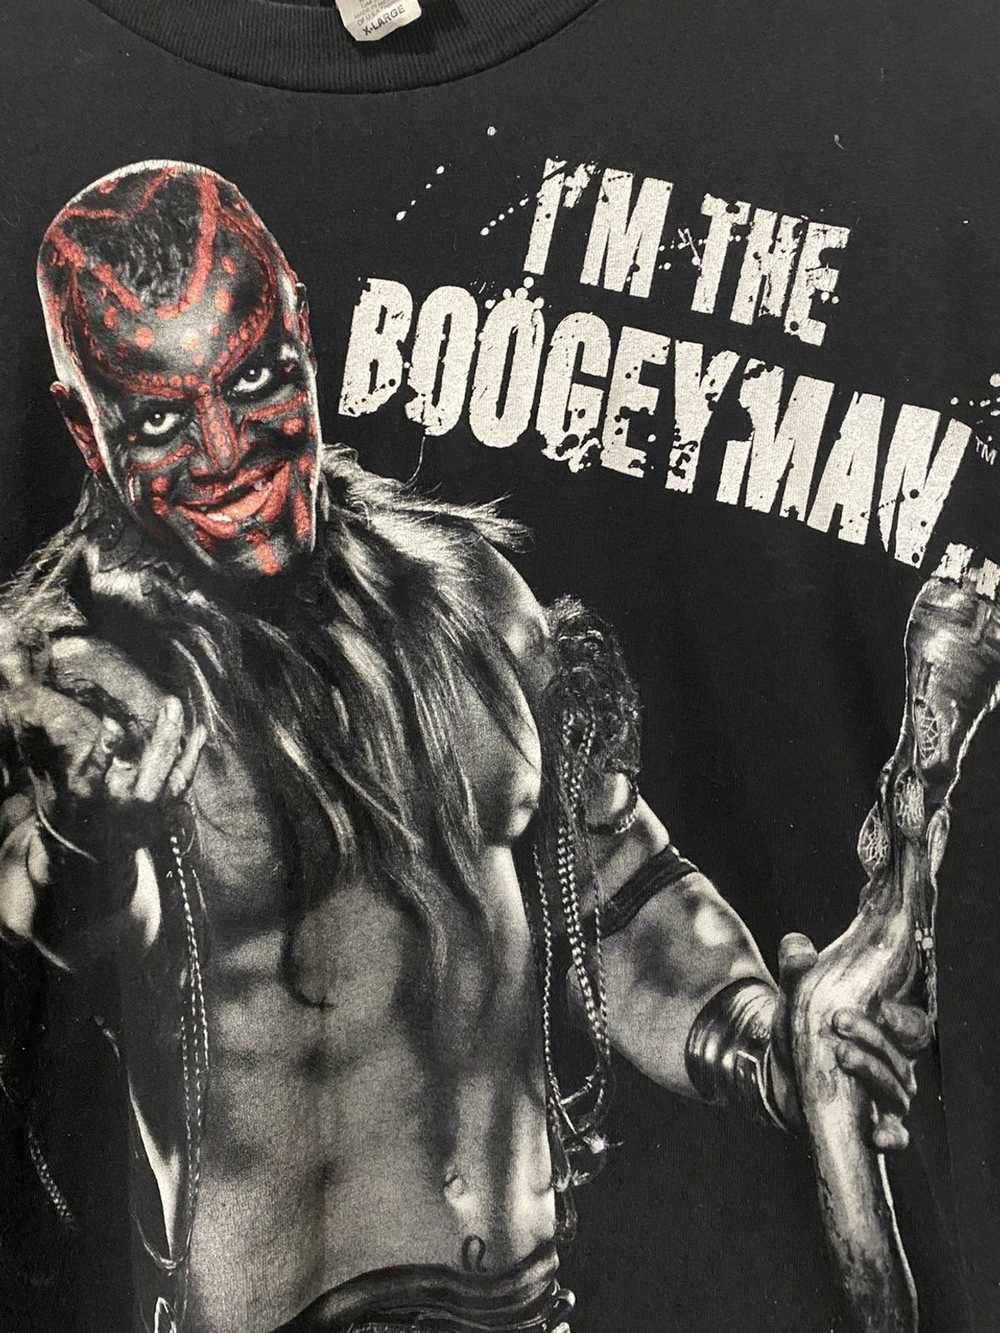 Wwe Vintage boogeyman shirt wwe - image 3